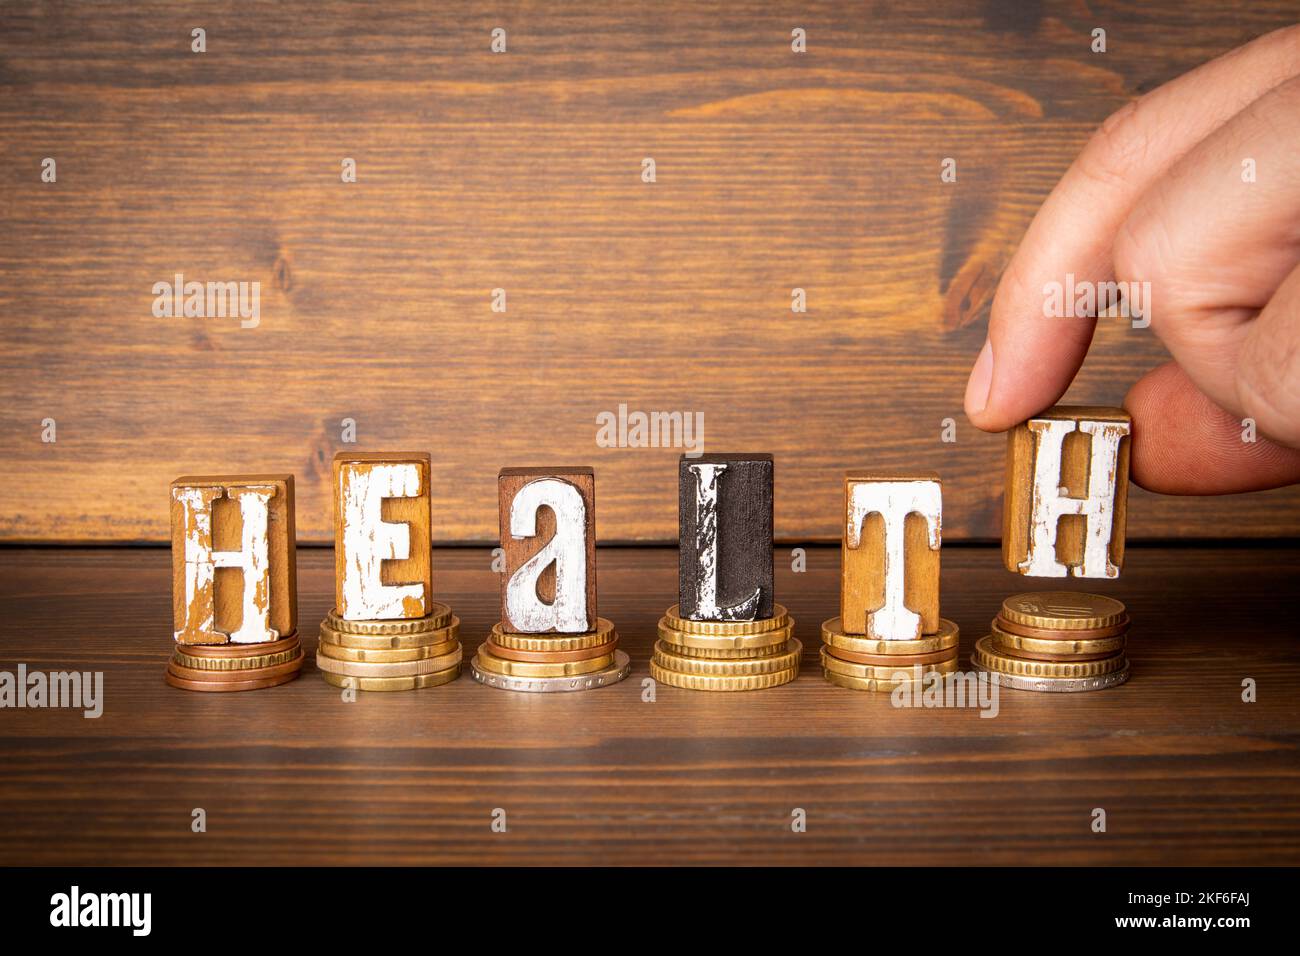 Health. Coins and alphabet blocks on a dark wooden background. Stock Photo